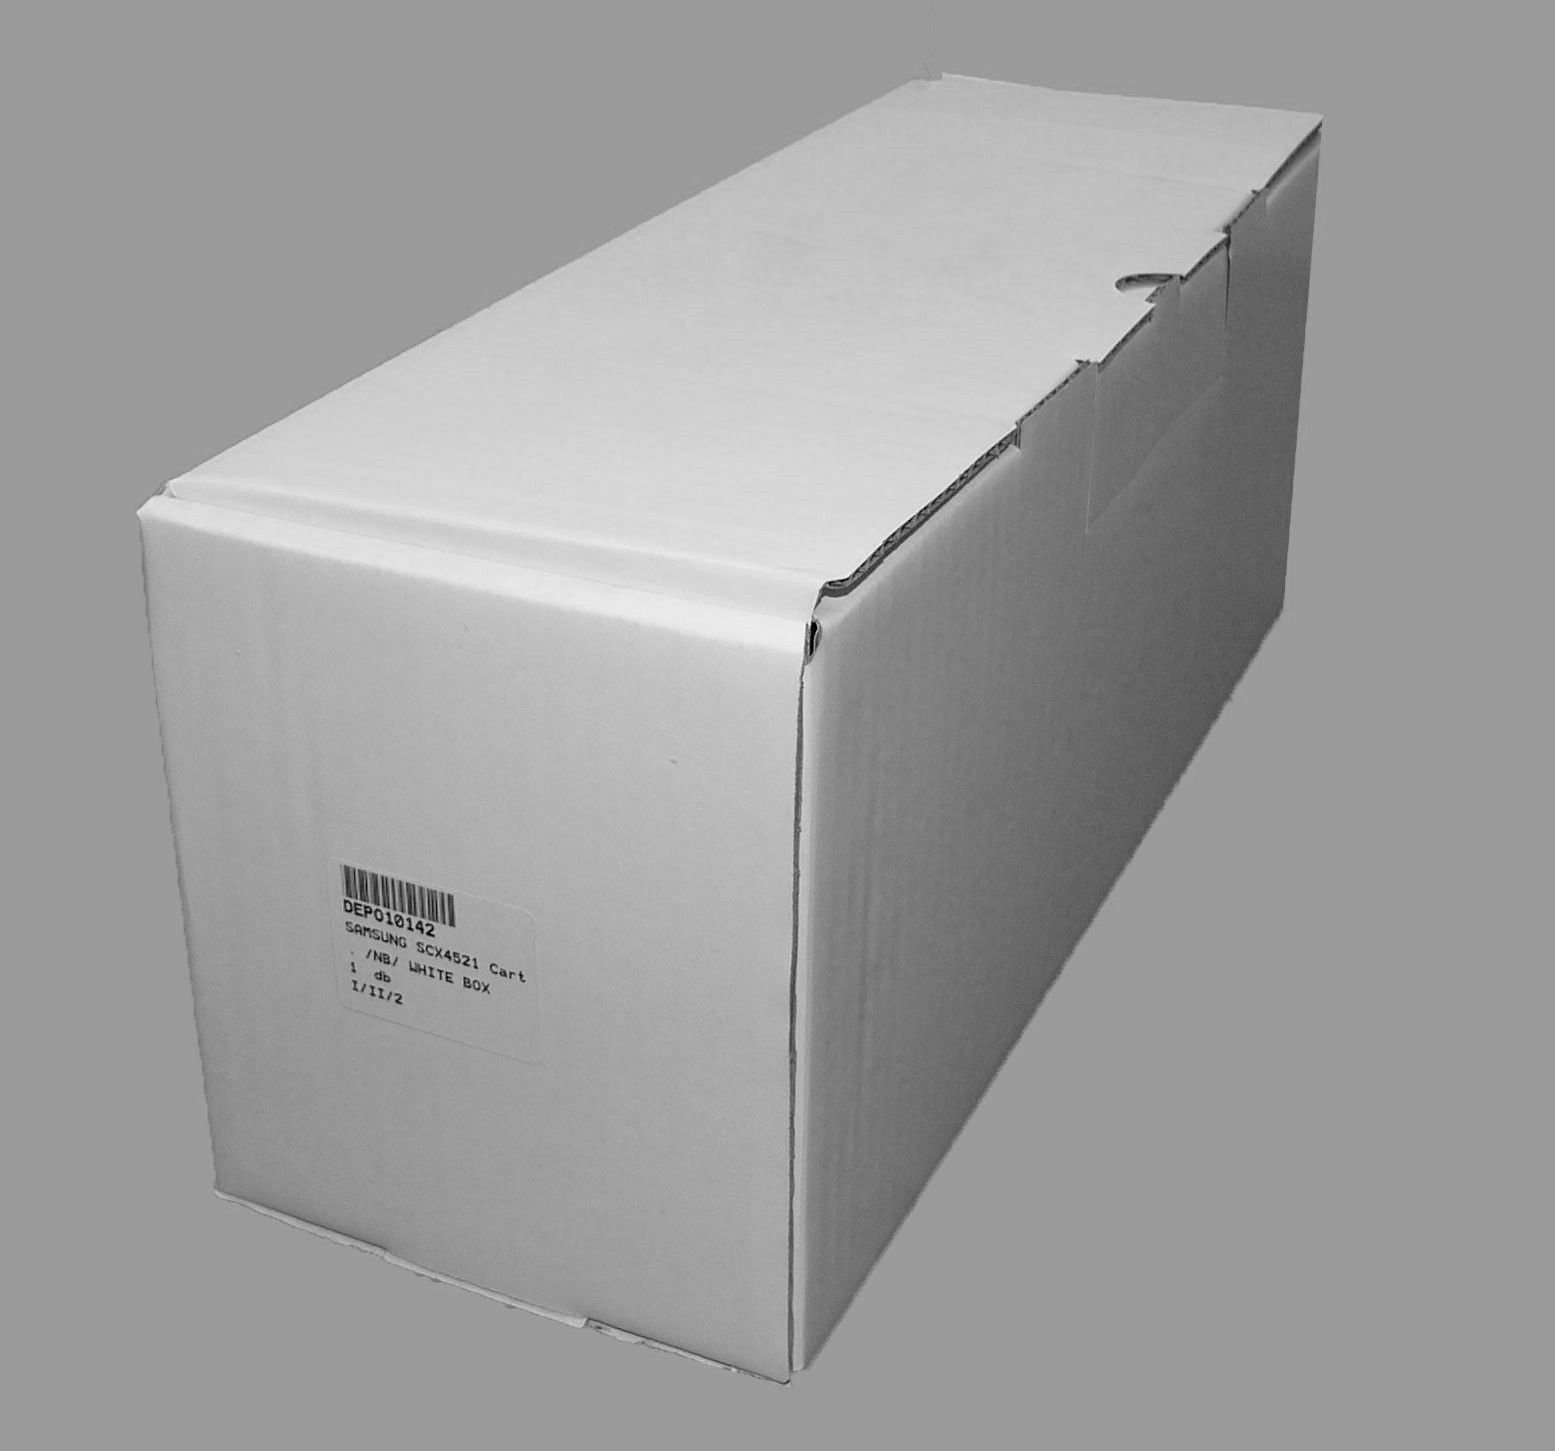 SAMSUNG CLP310 Black Cartridge K4092S WHITE BOX (For use)